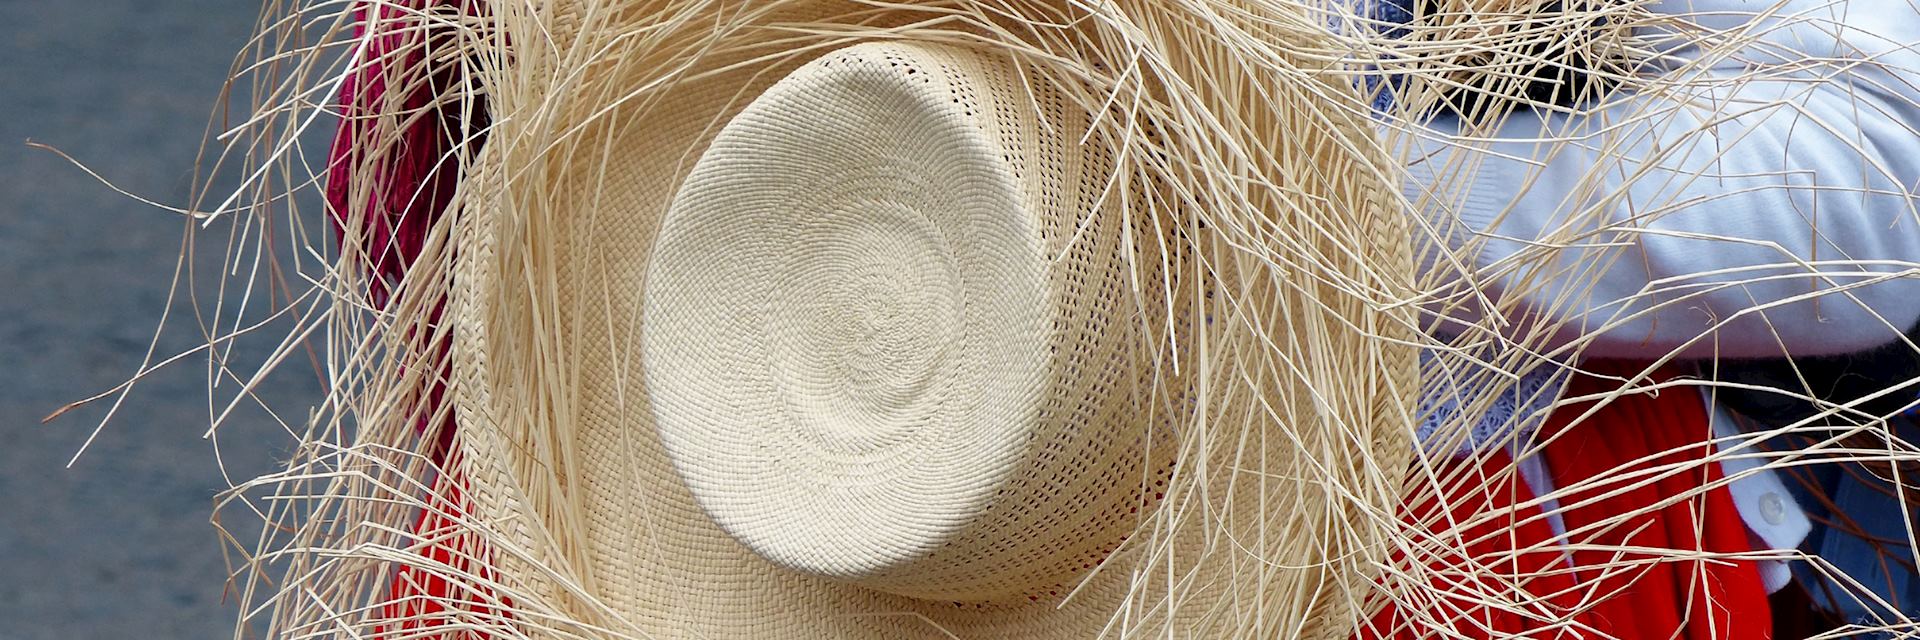 Panama hat making